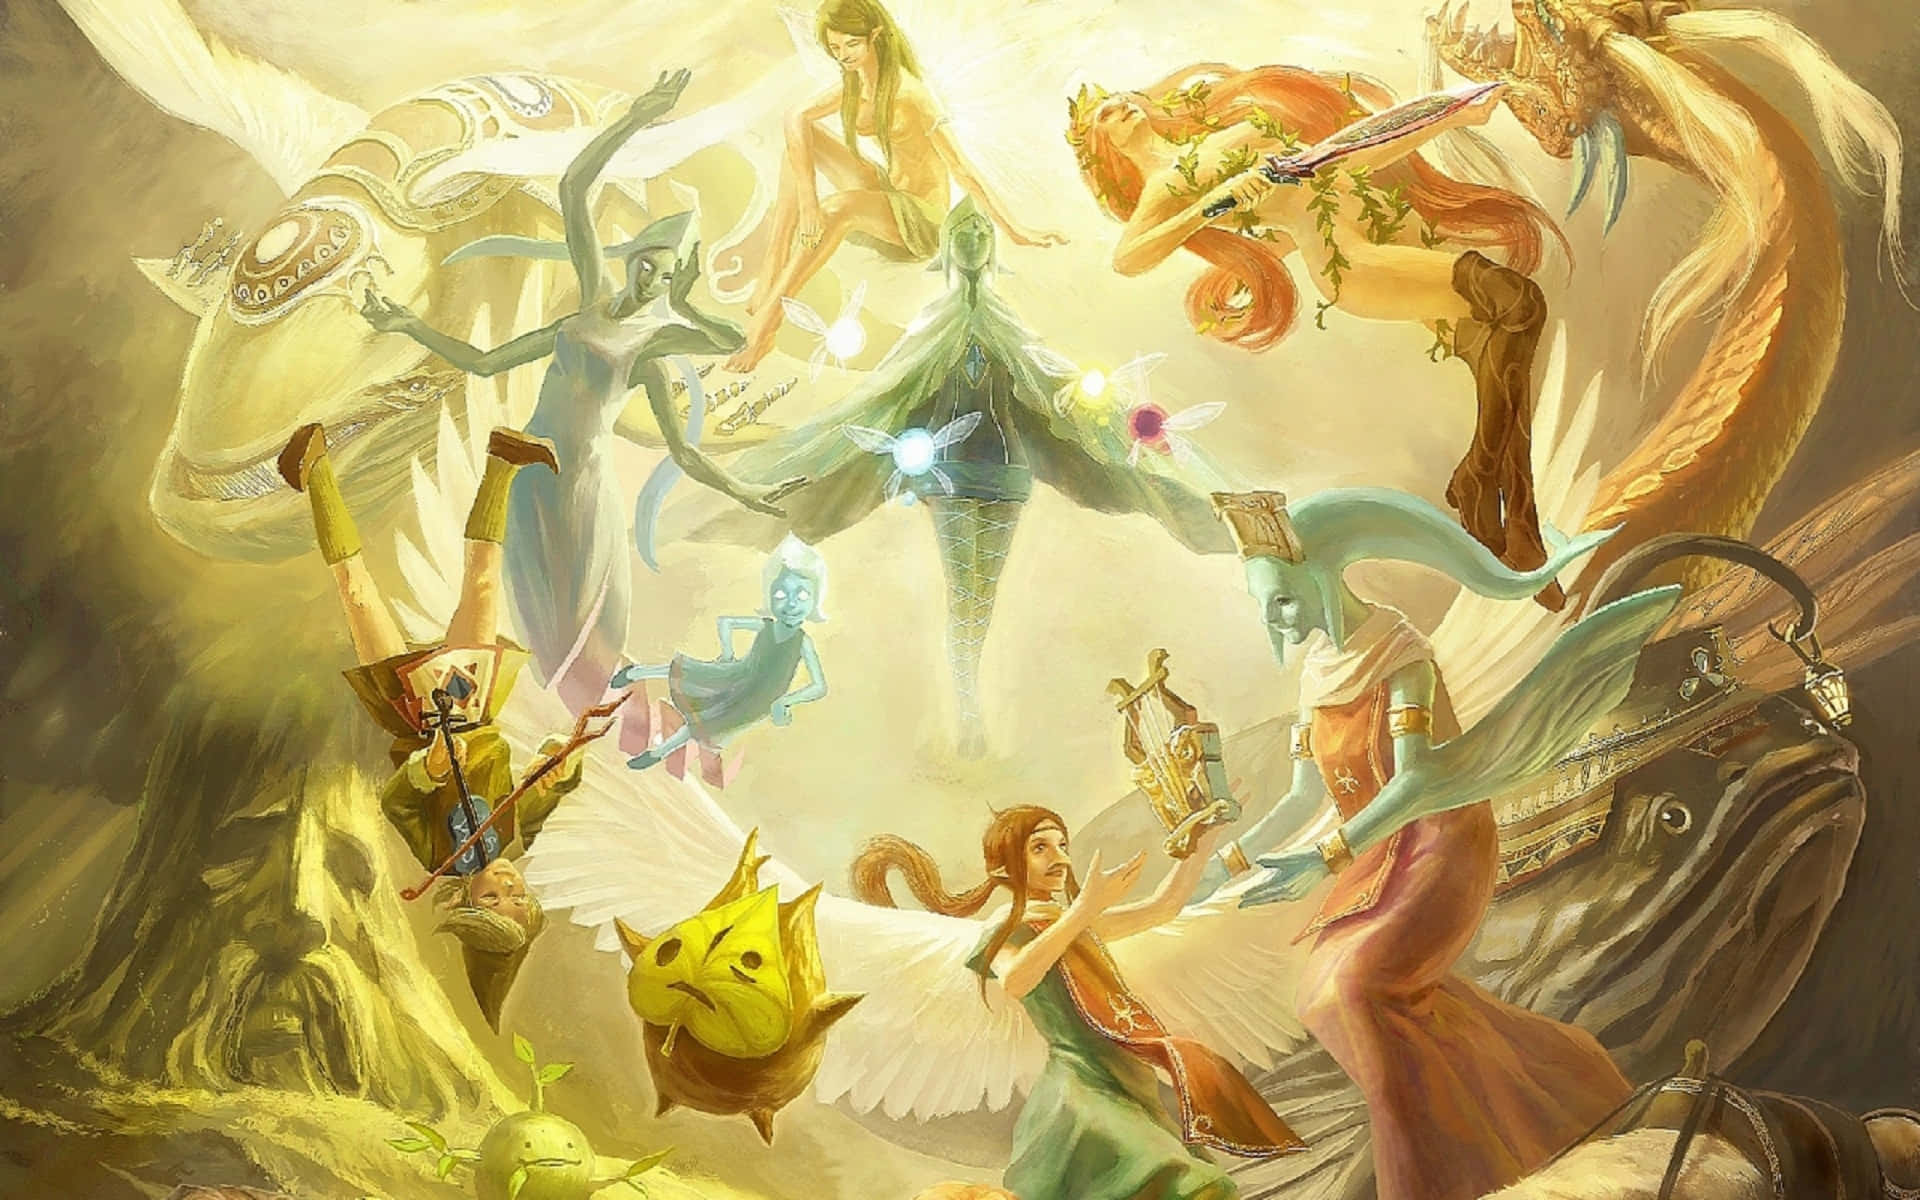 Epic gathering of The Legend of Zelda characters in stunning artwork Wallpaper